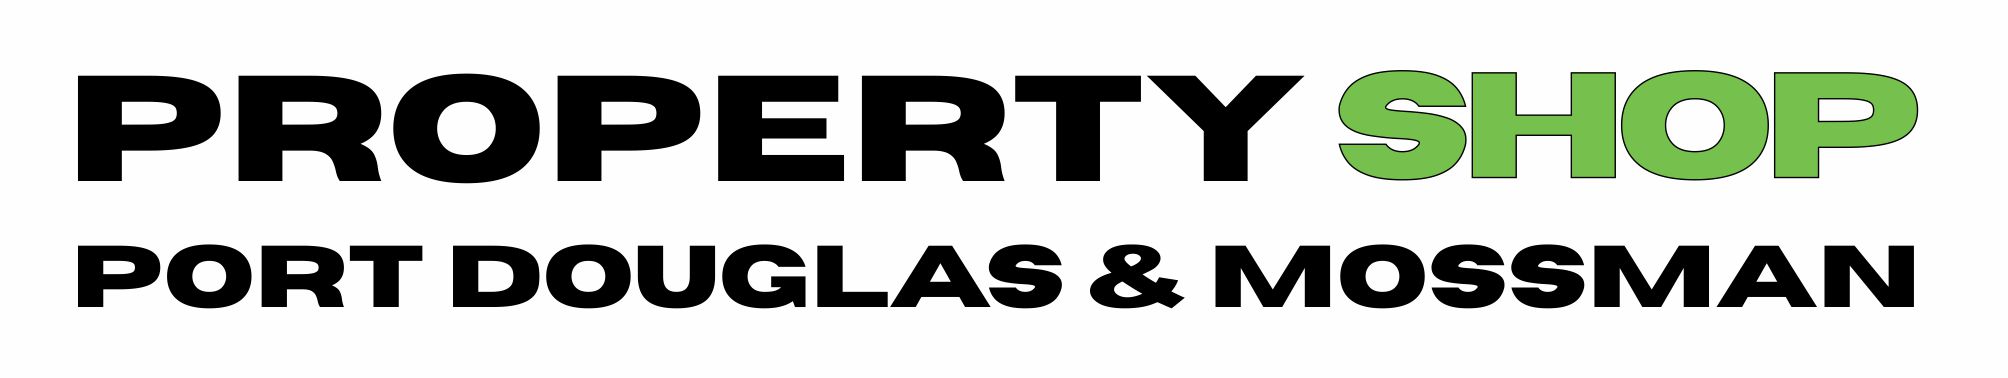 Real Estate Agency Property Shop Port Douglas